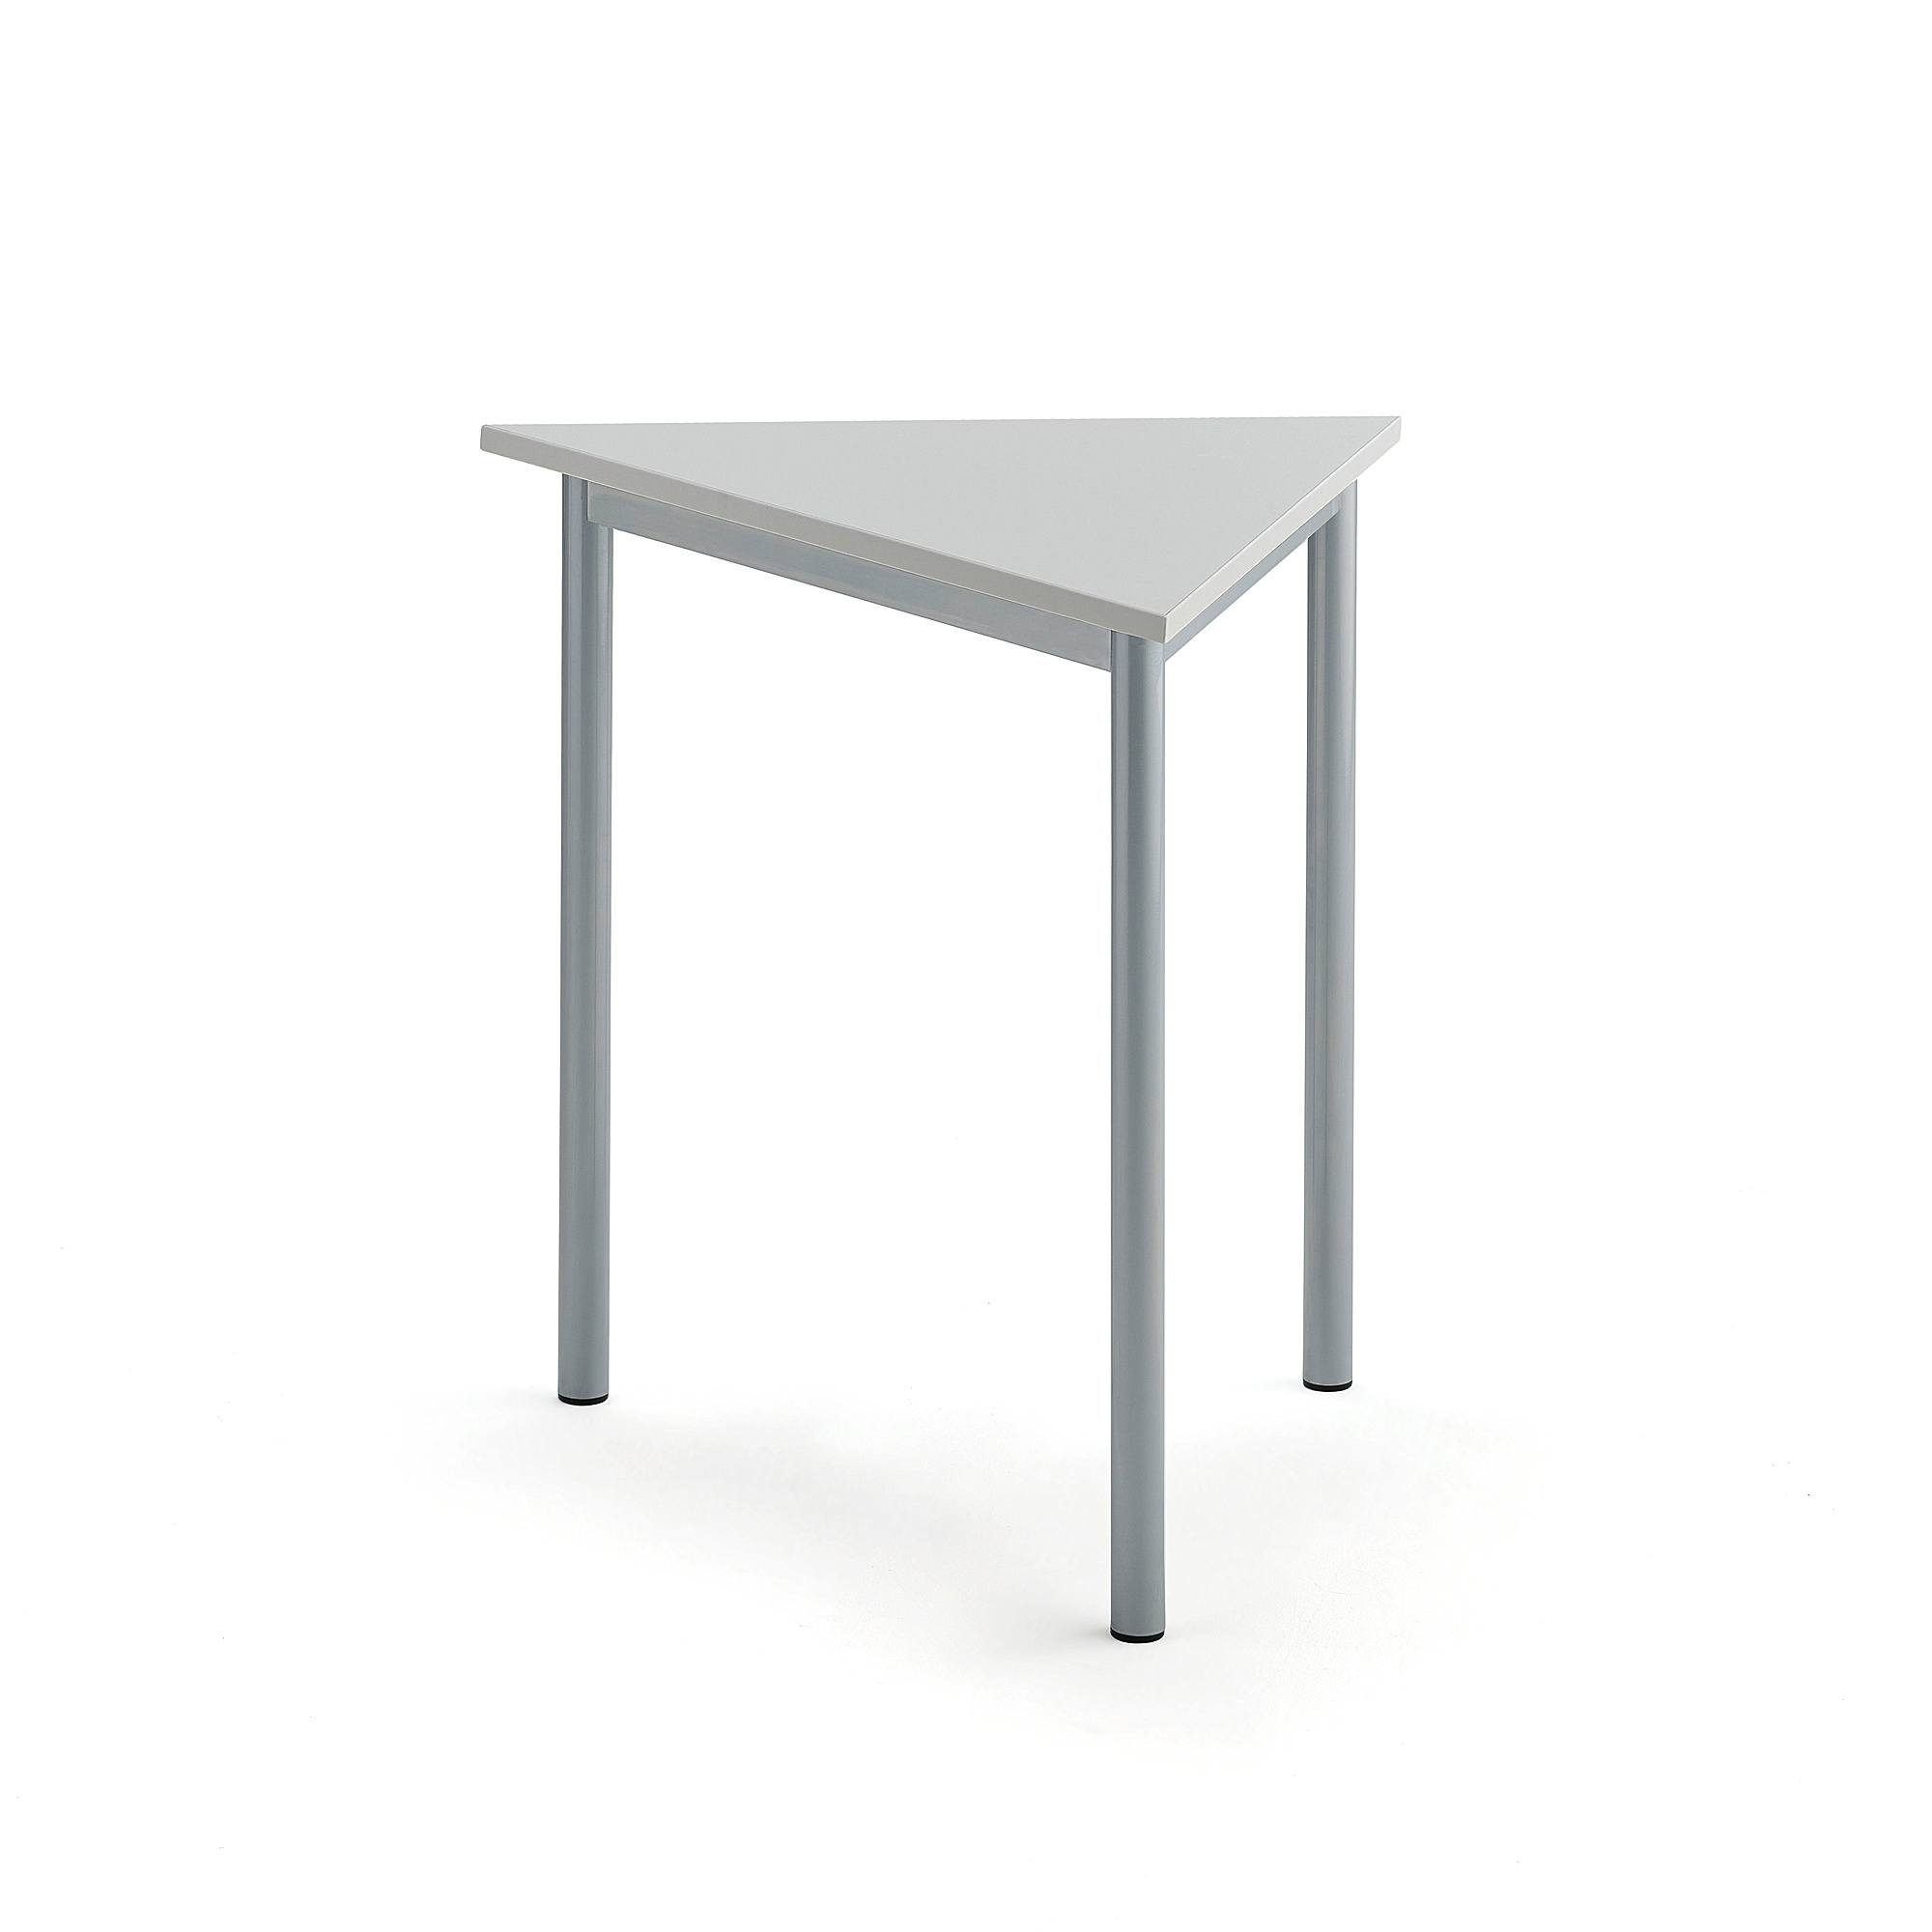 Stůl SONITUS TRIANGEL, 800x700x720 mm, stříbrné nohy, HPL deska tlumící hluk, šedá